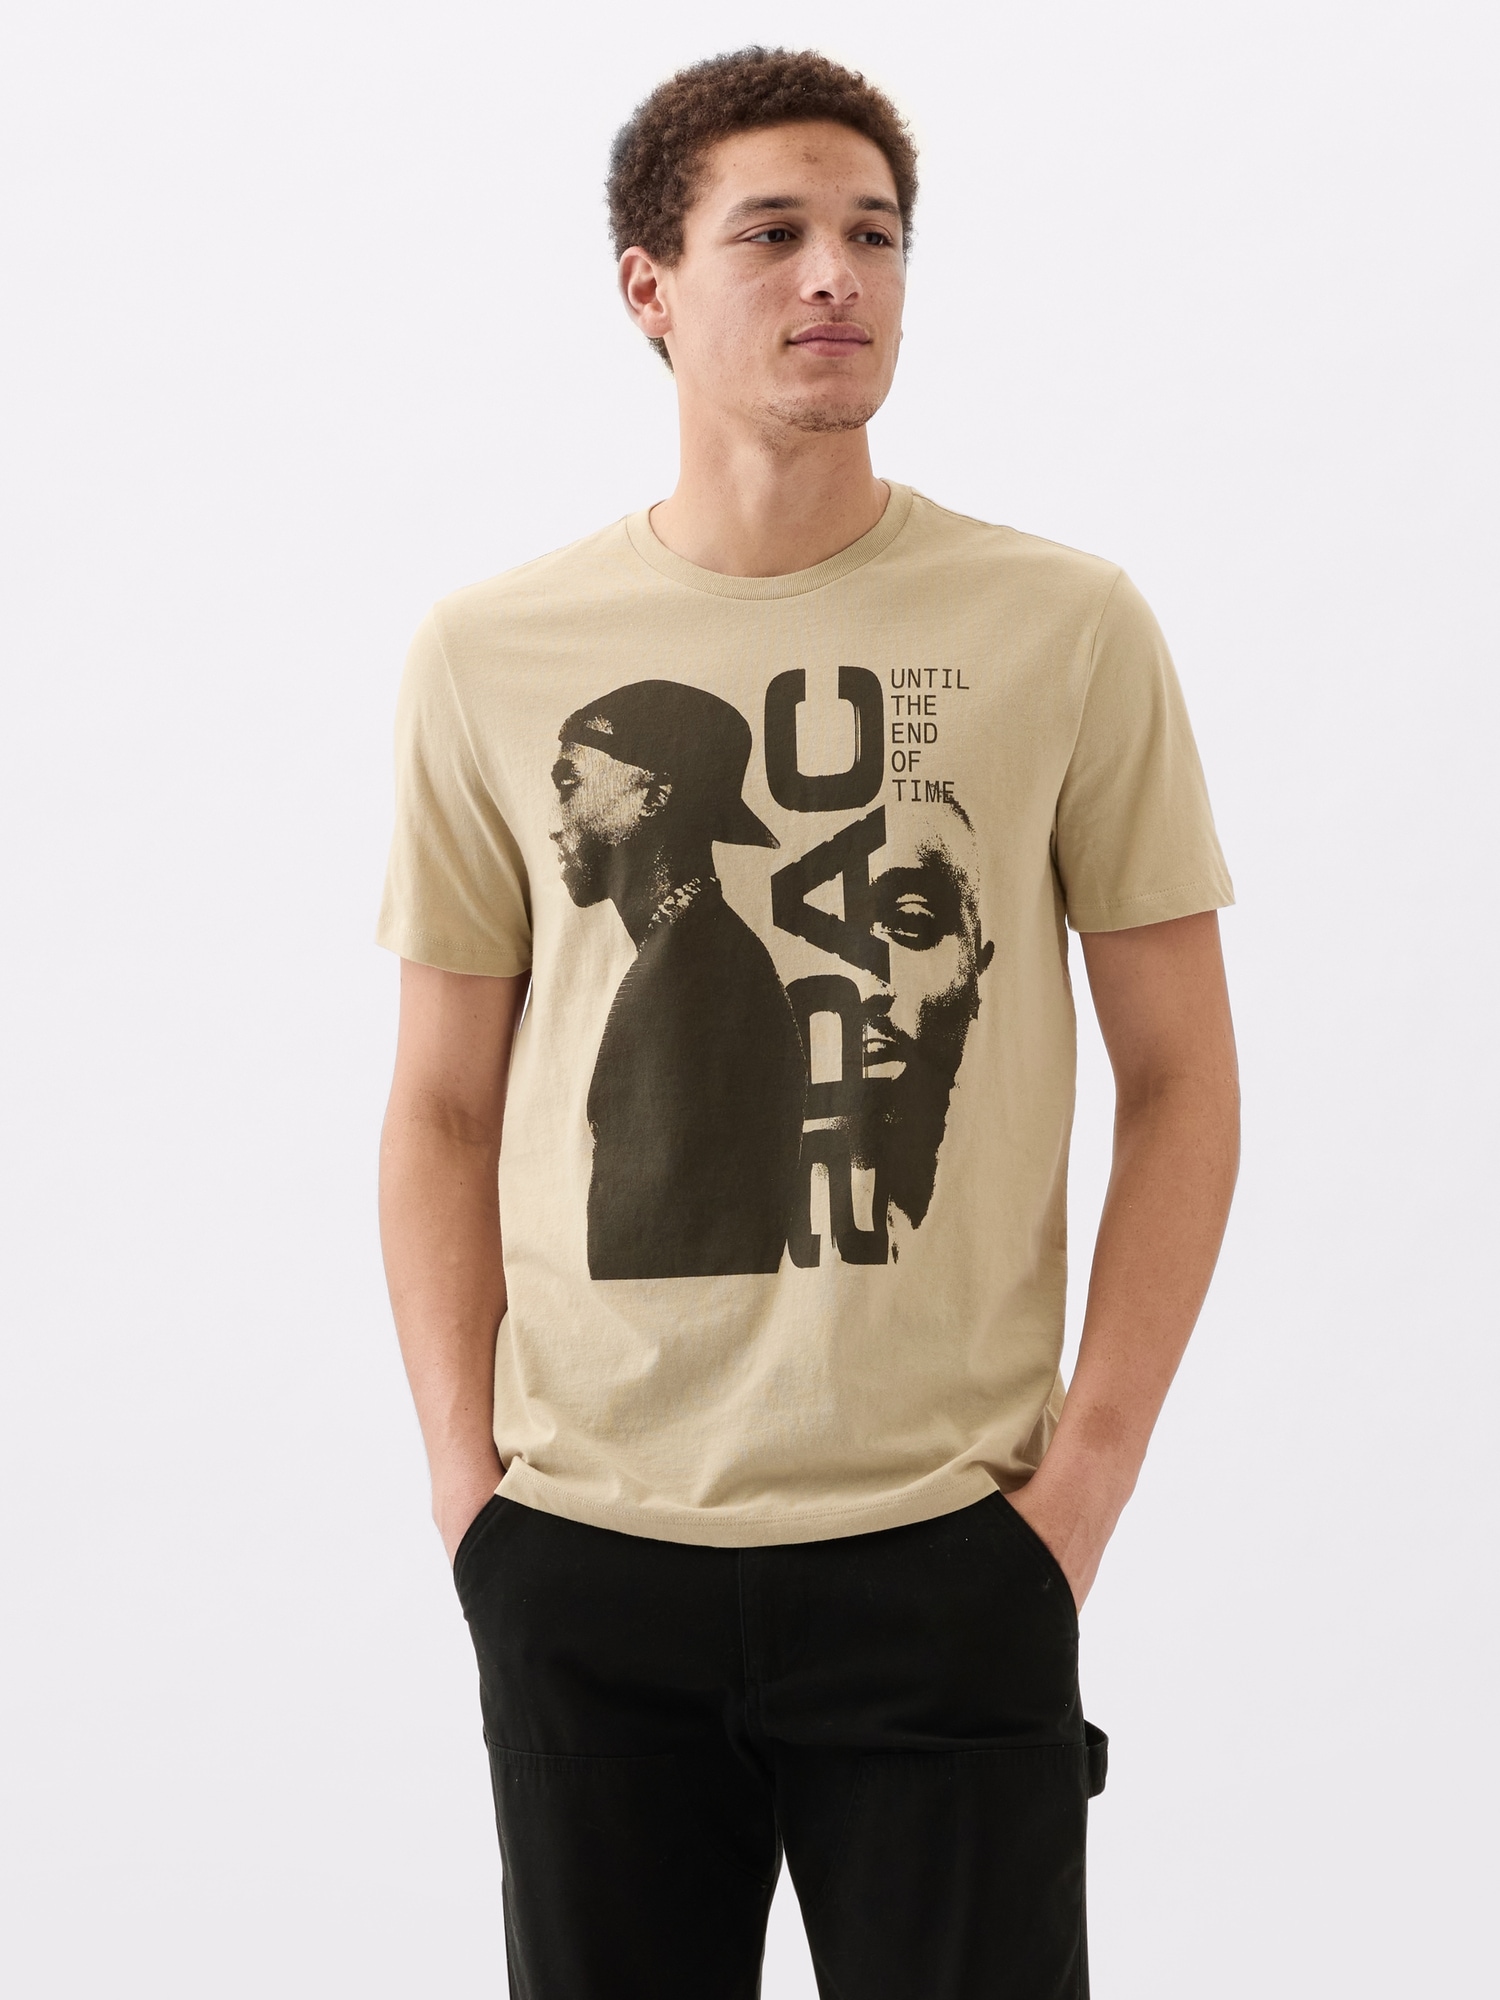 Tupac Shakur Graphic T-Shirt